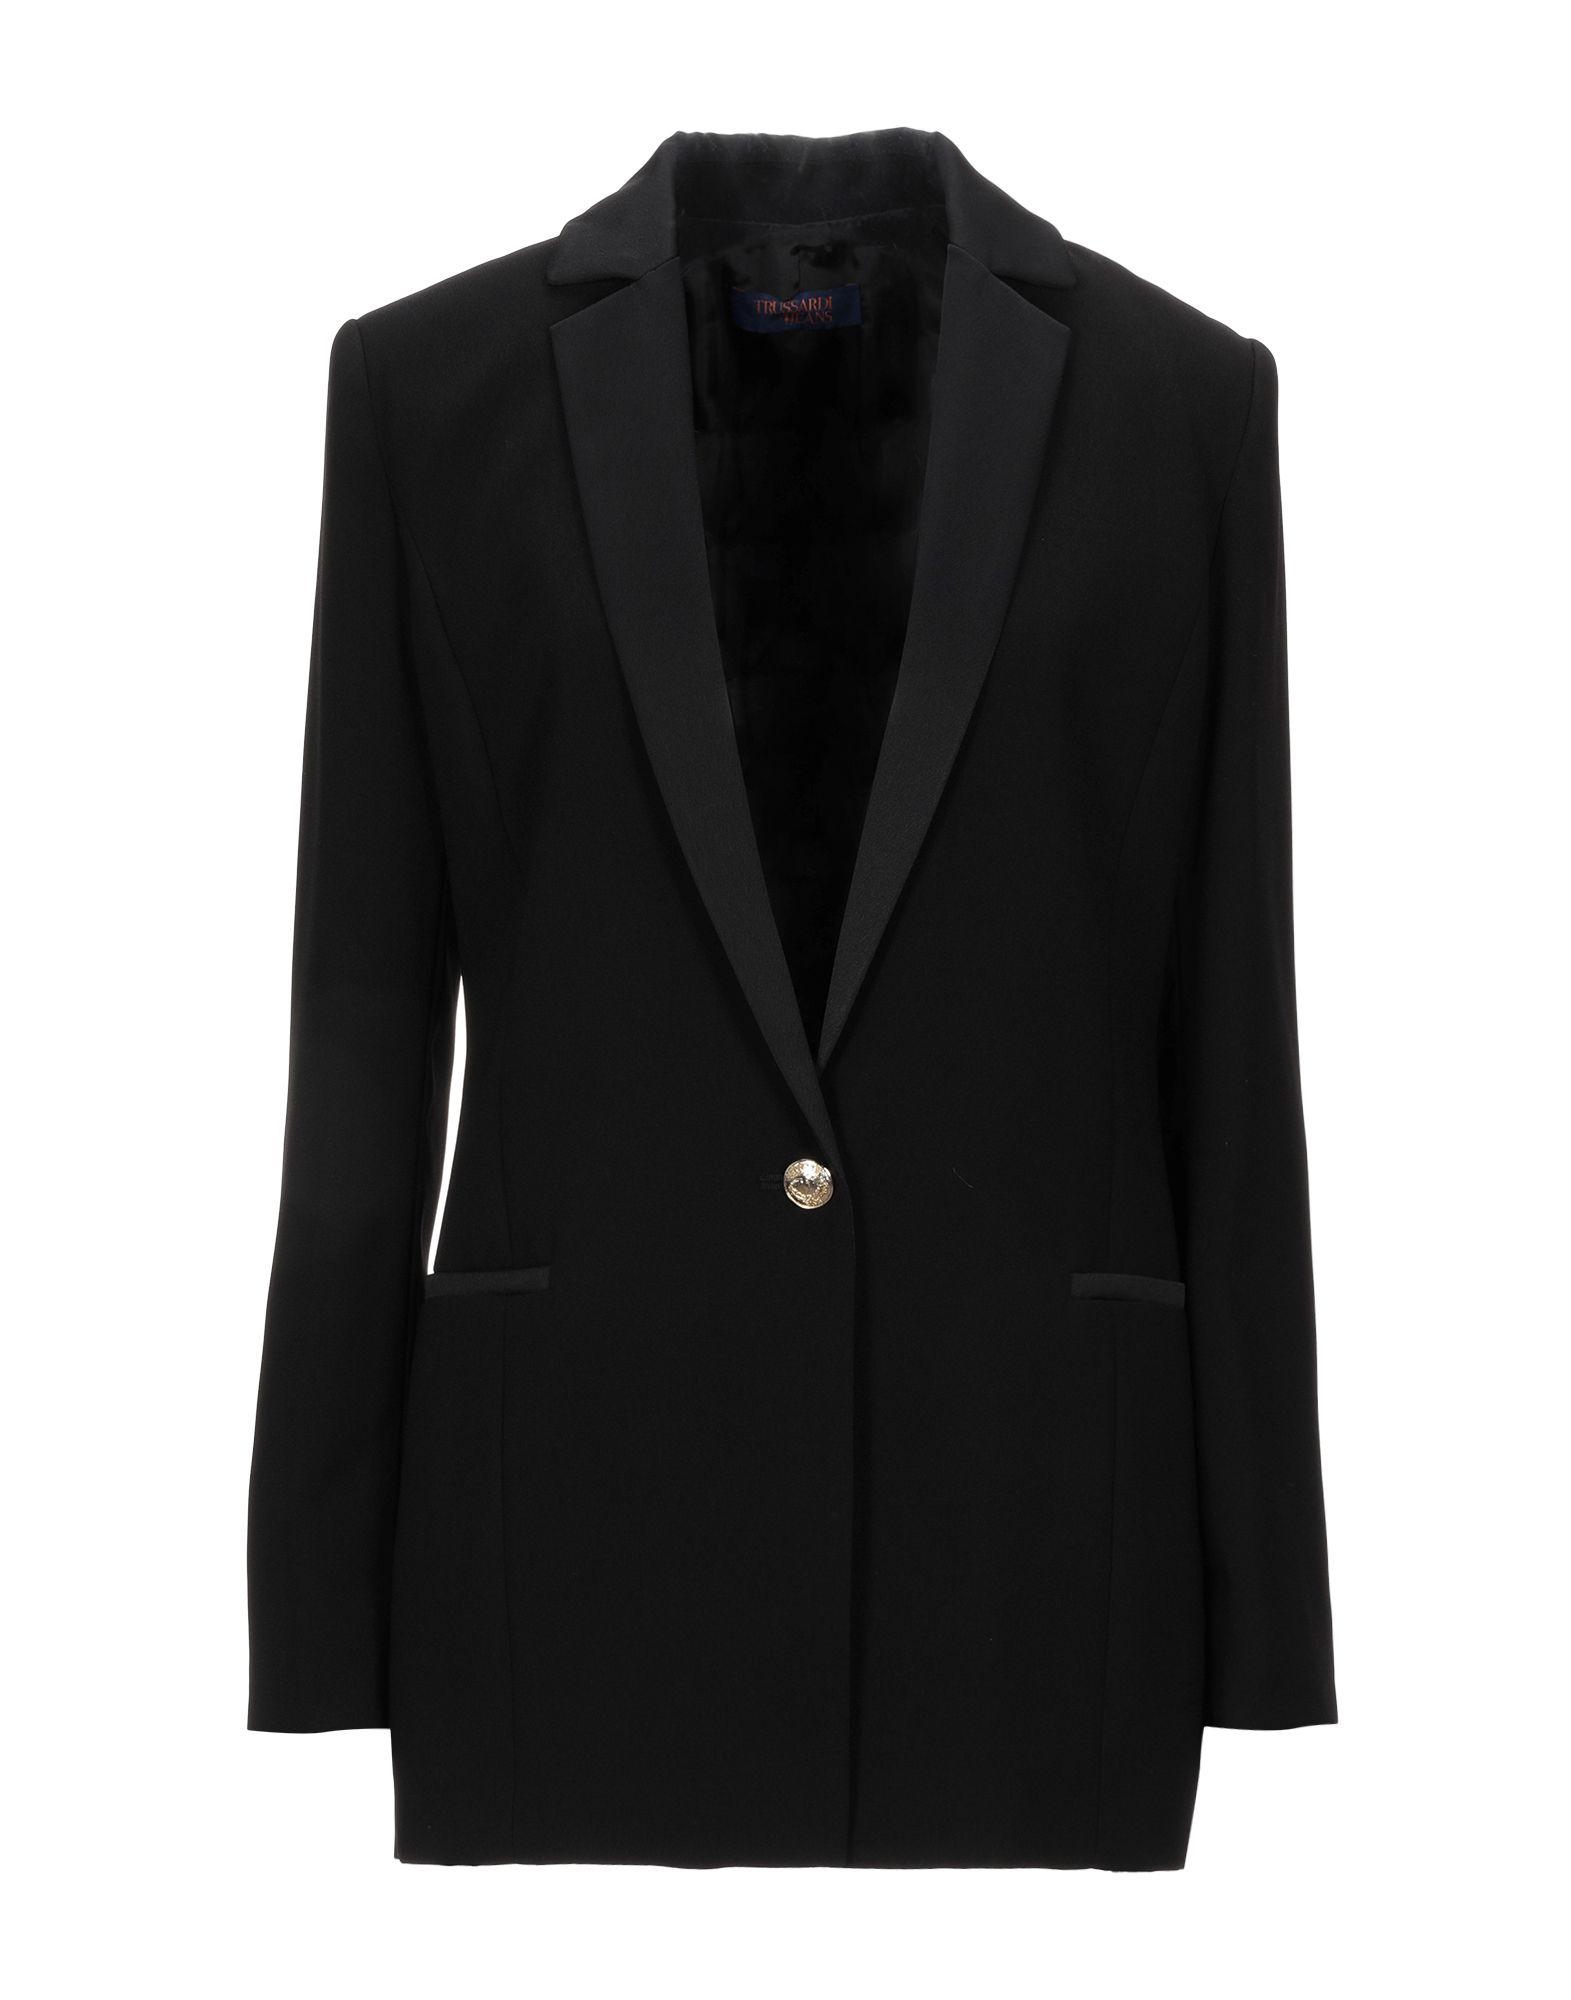 Trussardi Synthetic Suit Jacket in Black - Lyst